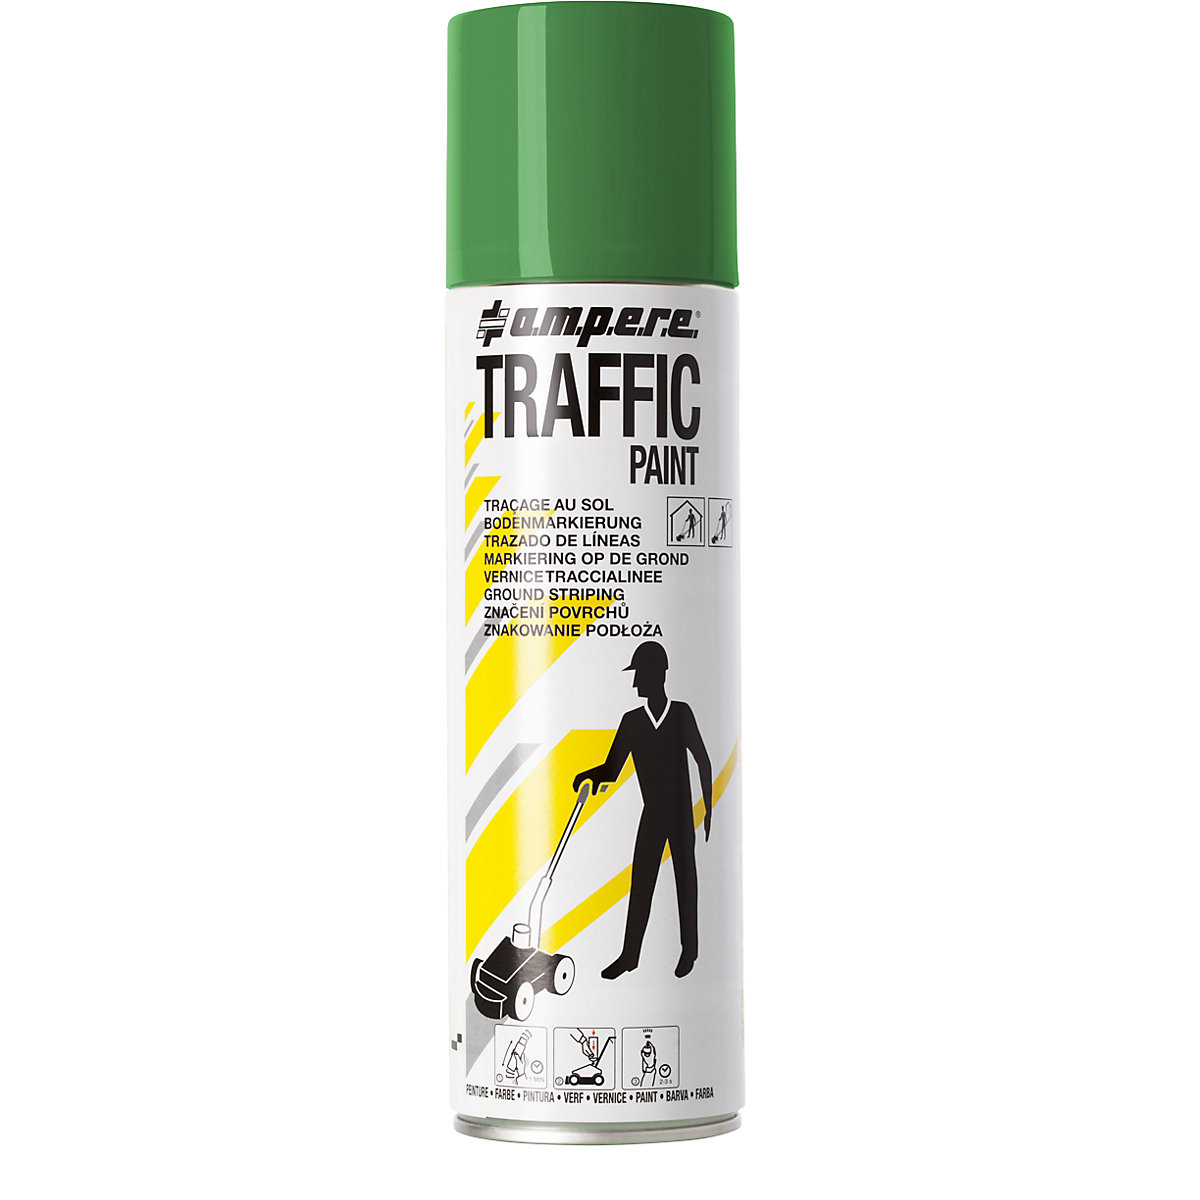 Markeerverf Traffic Paint® – Ampere, inhoud 500 ml, VE = 12 spuitbussen, groen-7